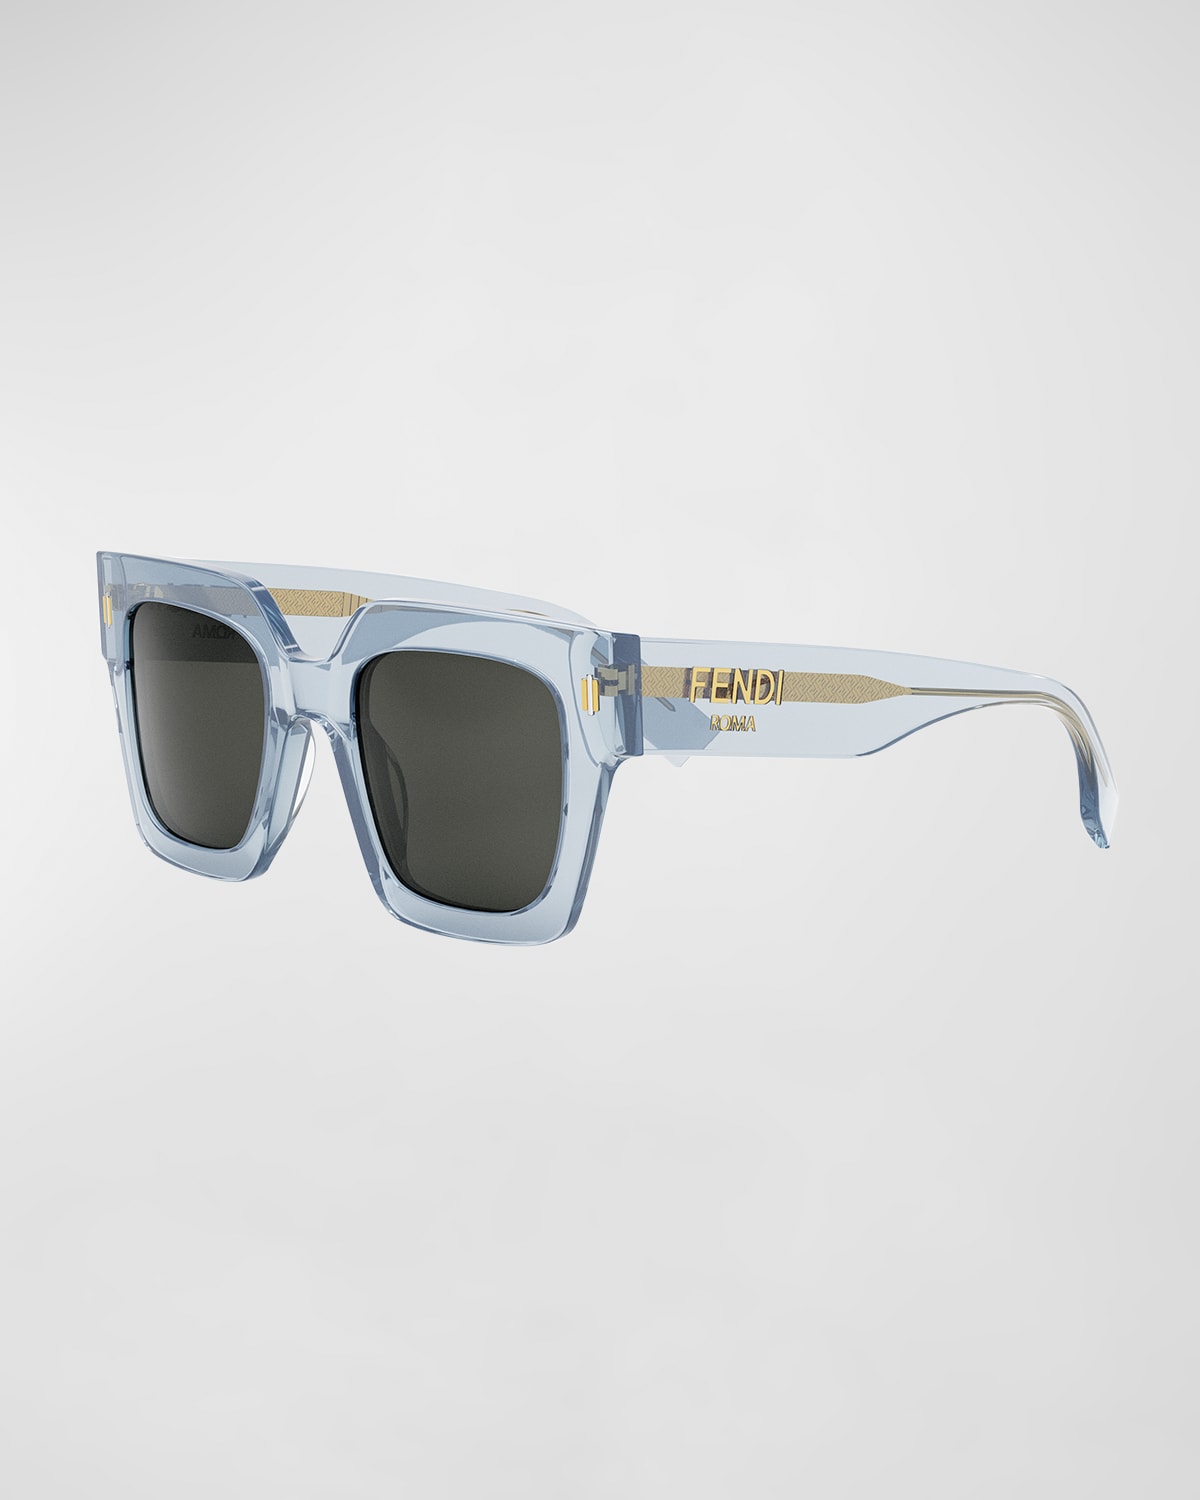 Fendi Roma Blue Square Acetate Sunglasses